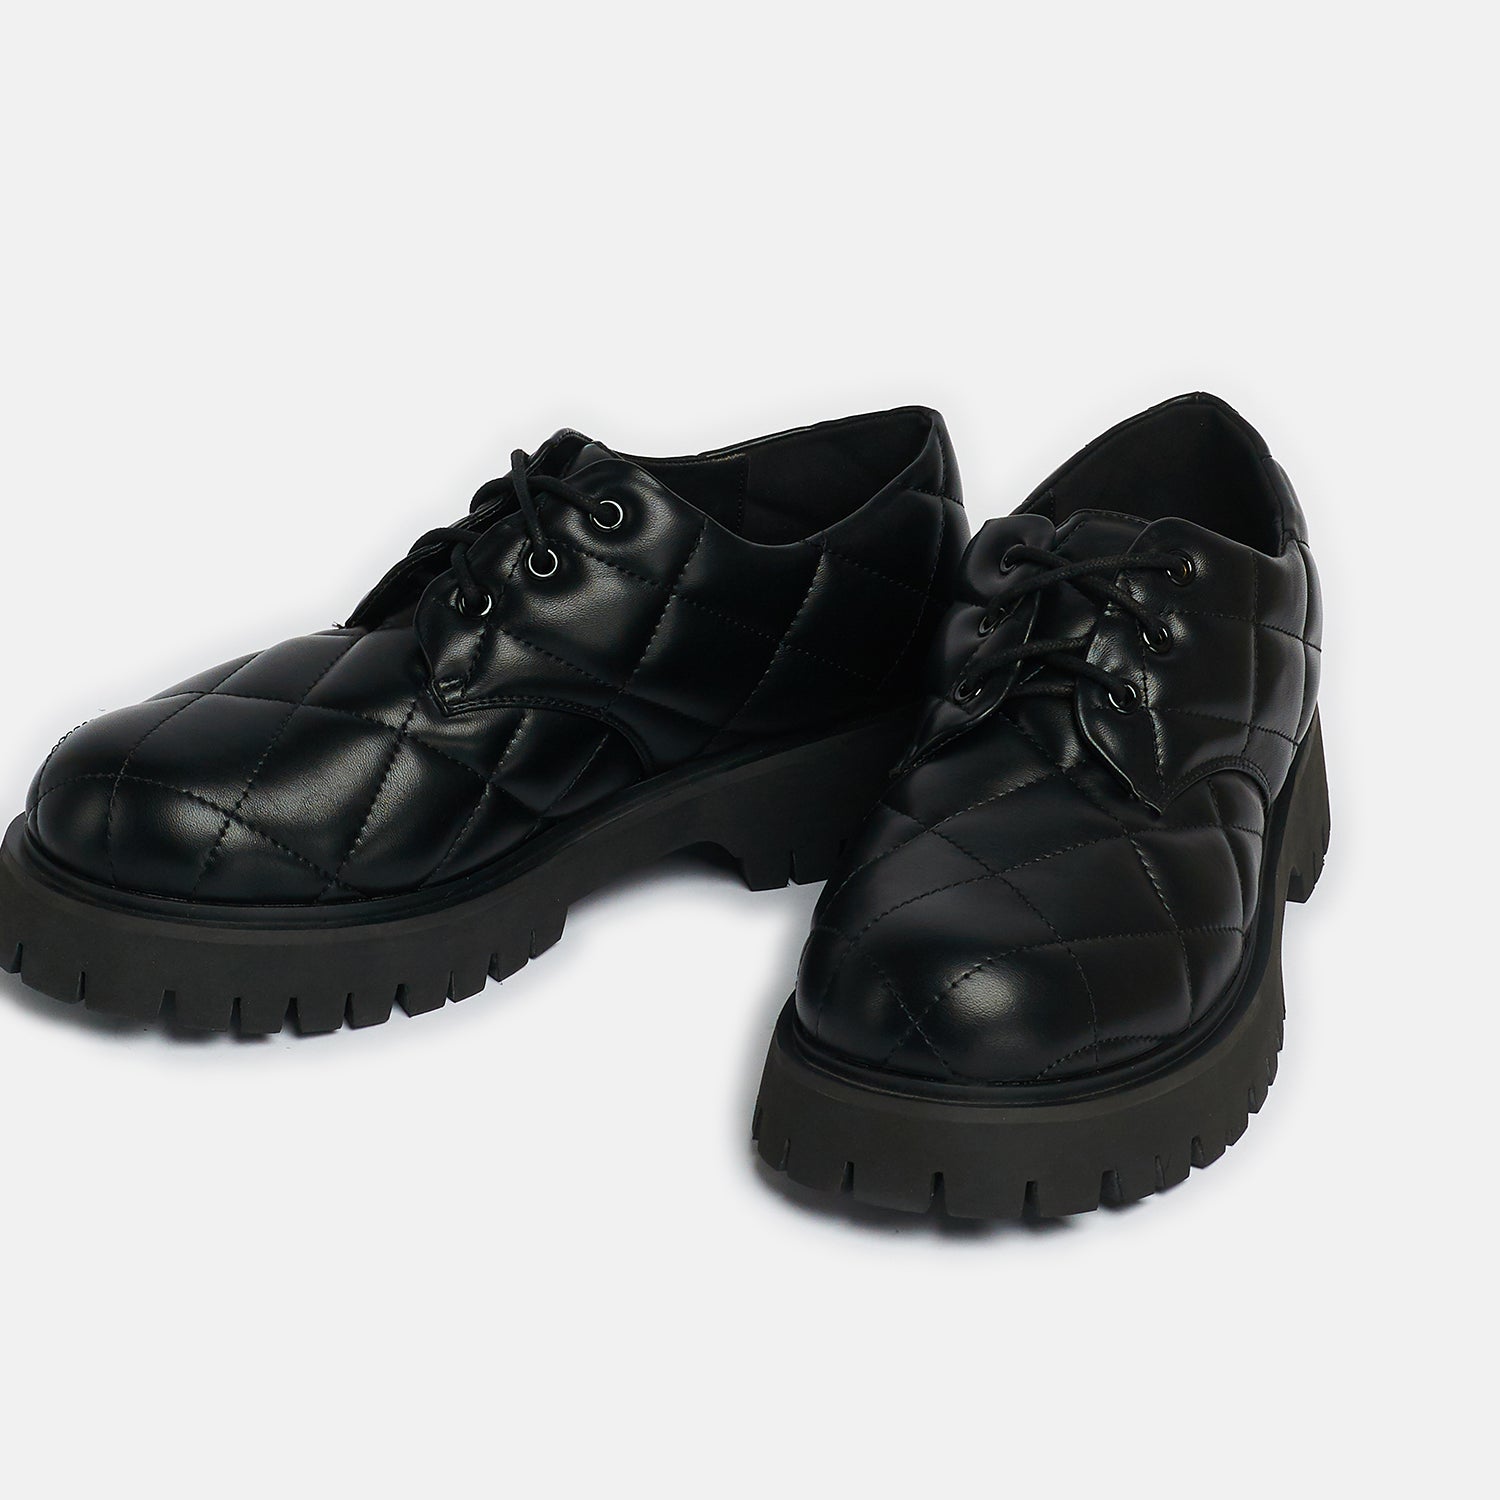 The Snug Cave Men's Black Quilted Shoes - Shoes - KOI Footwear - Black - Left Side View